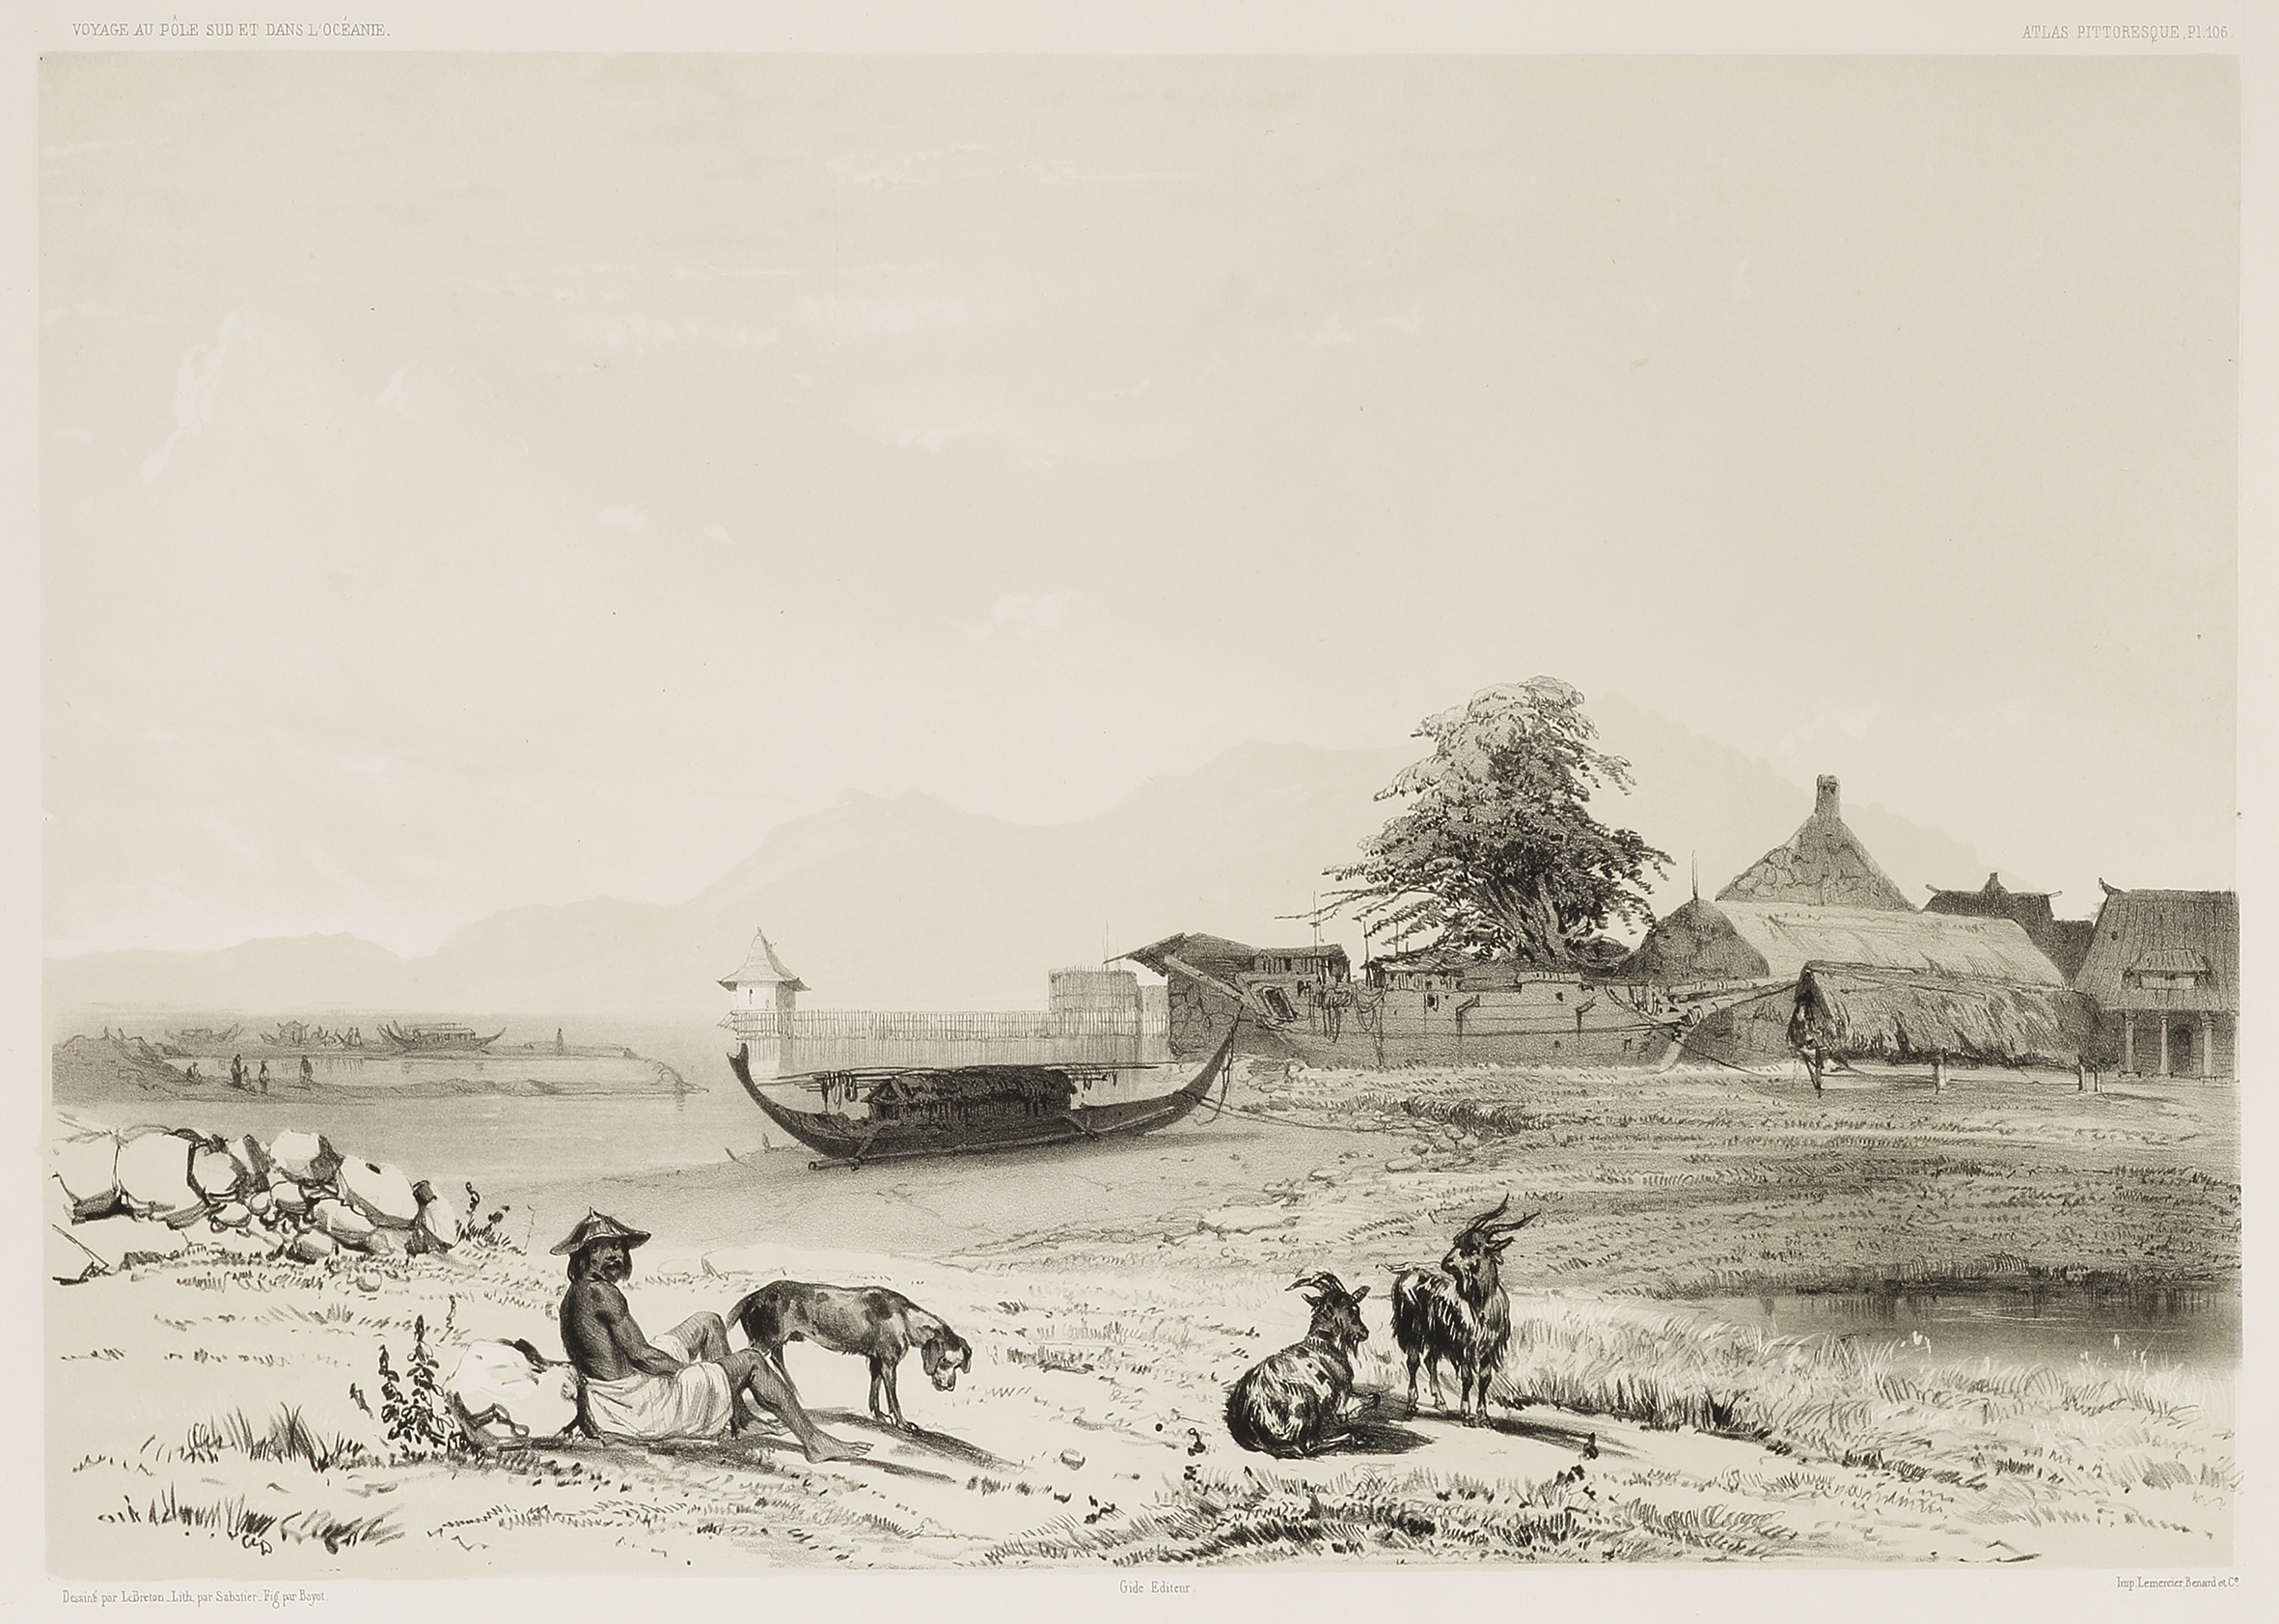 Rade de Ternate (Iles Moluques) [Maluku] - Antique View from 1842